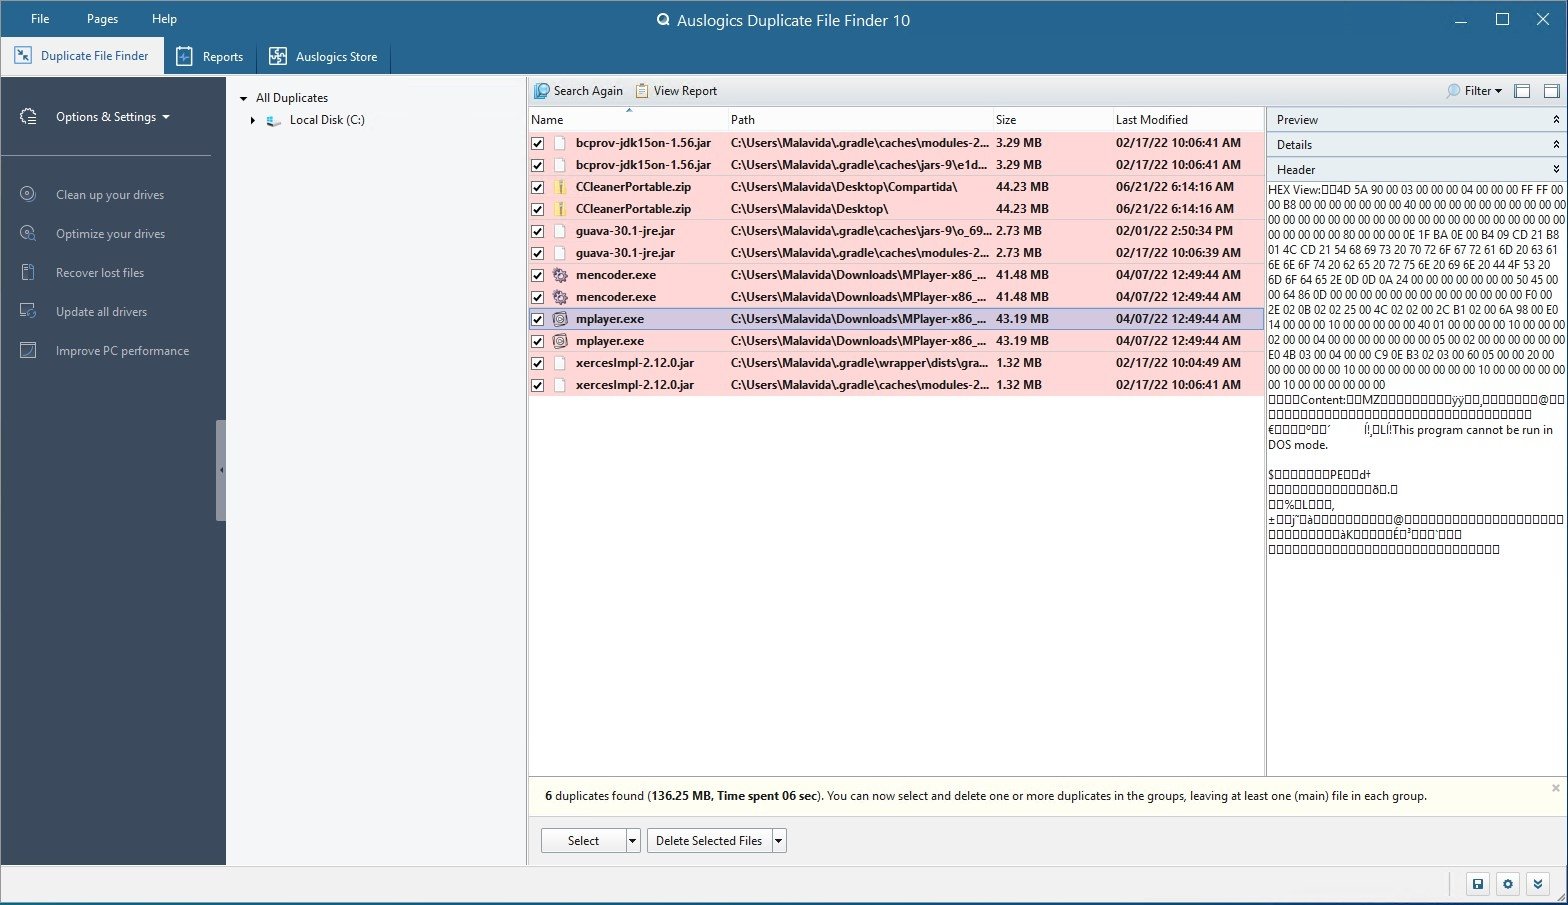 download Auslogics Duplicate File Finder 10.0.0.3 free